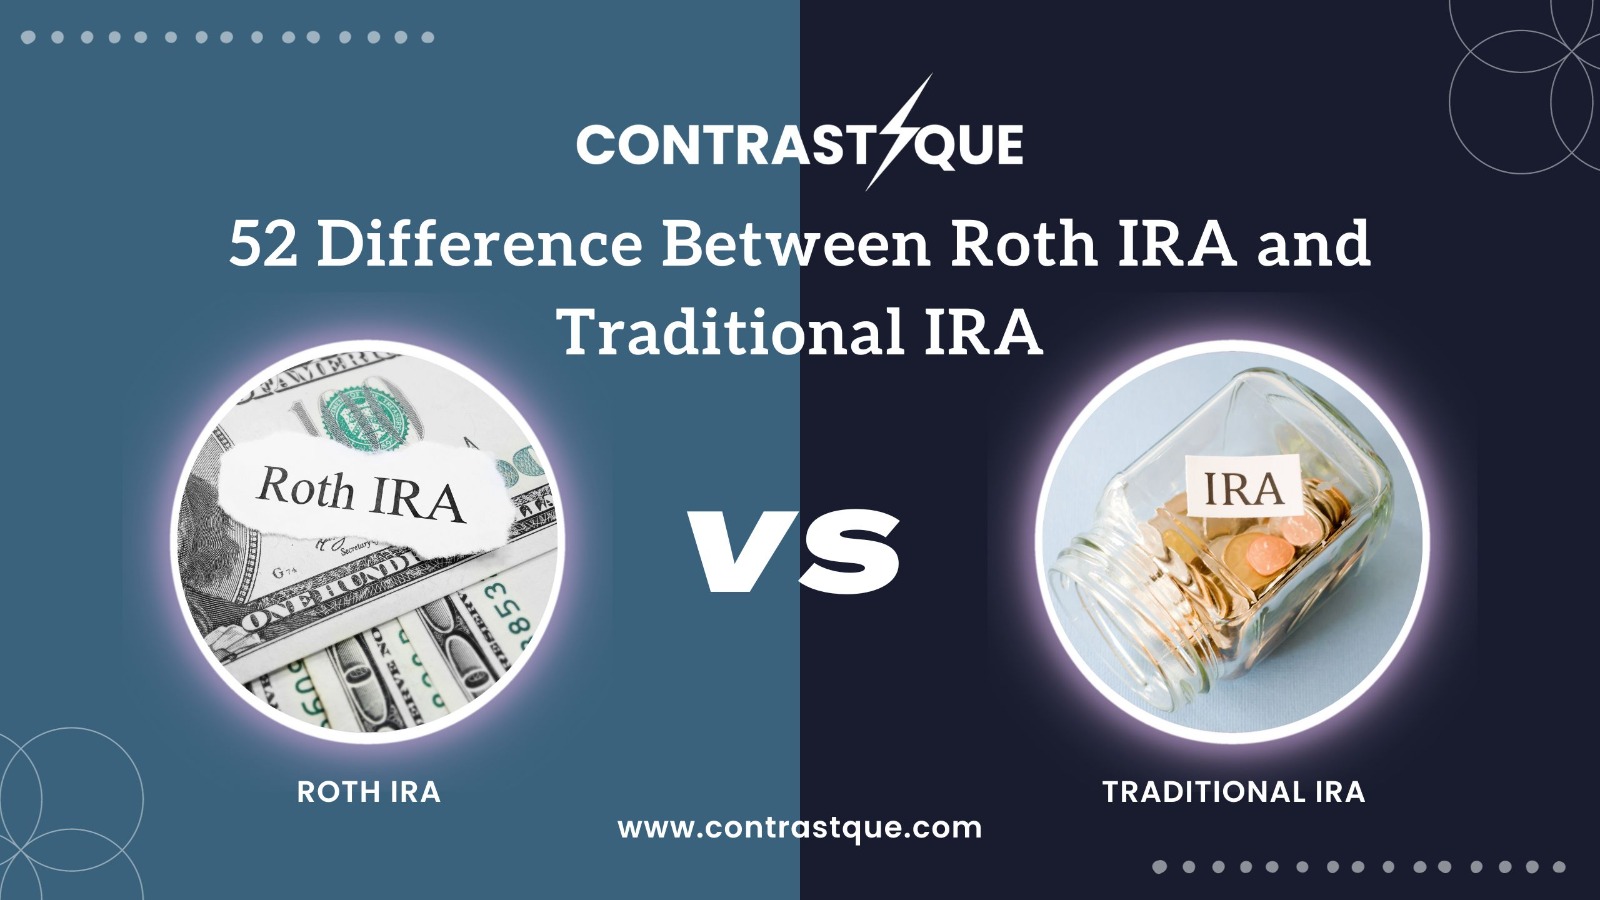 Roth IRA and Traditional IRA